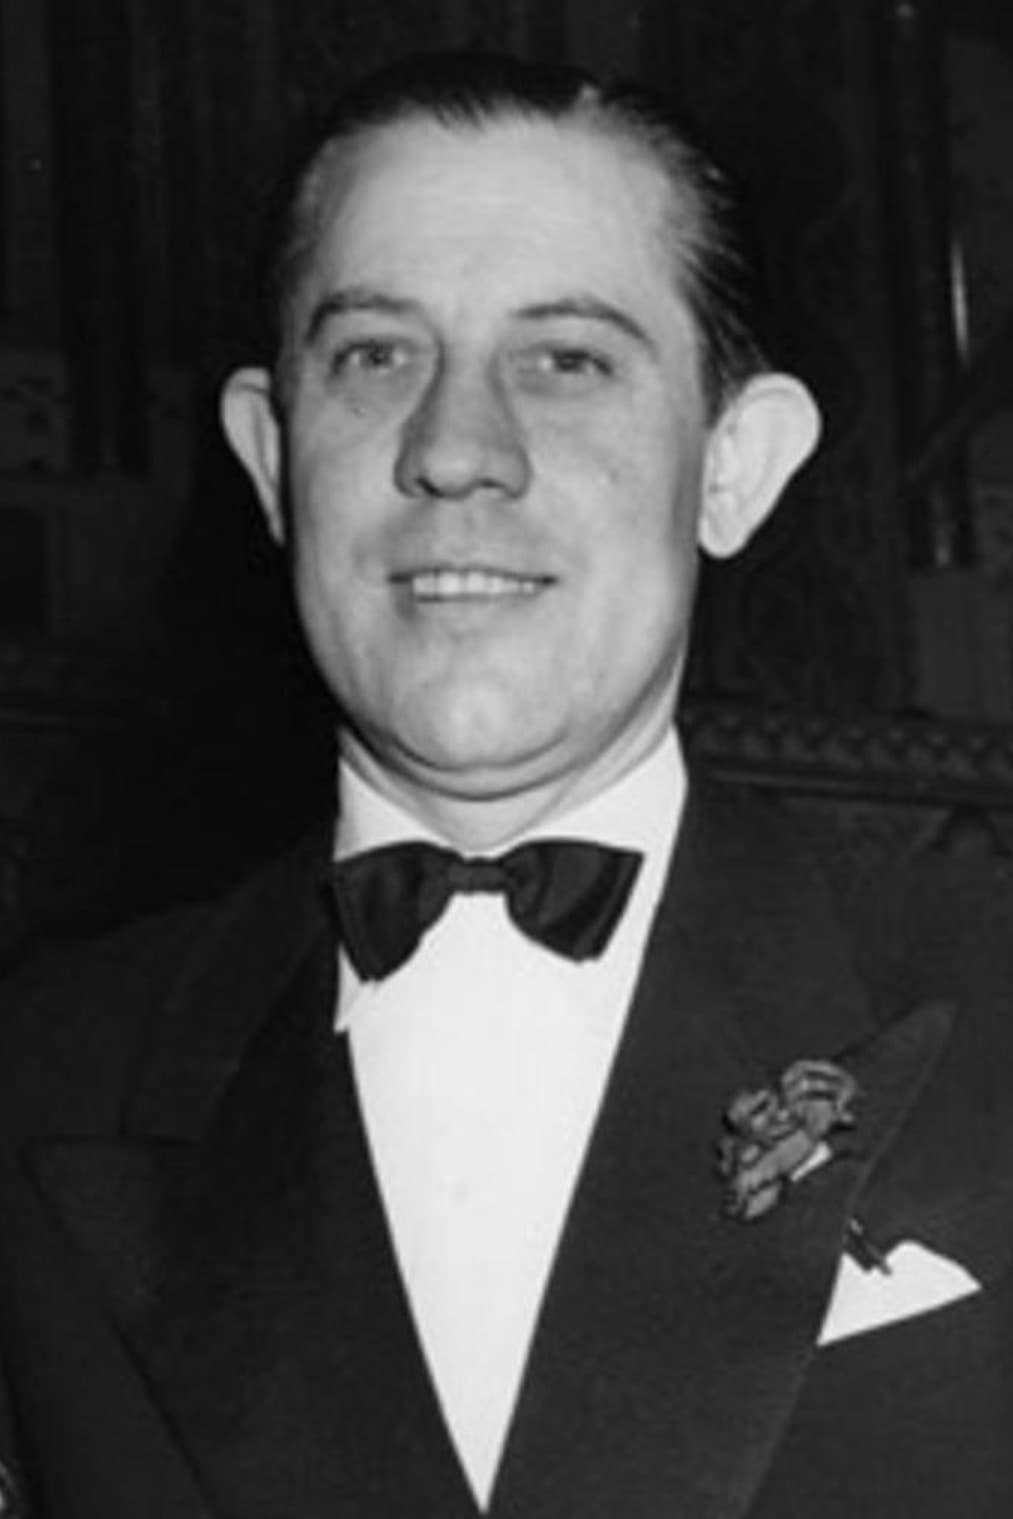 Ernest Haller